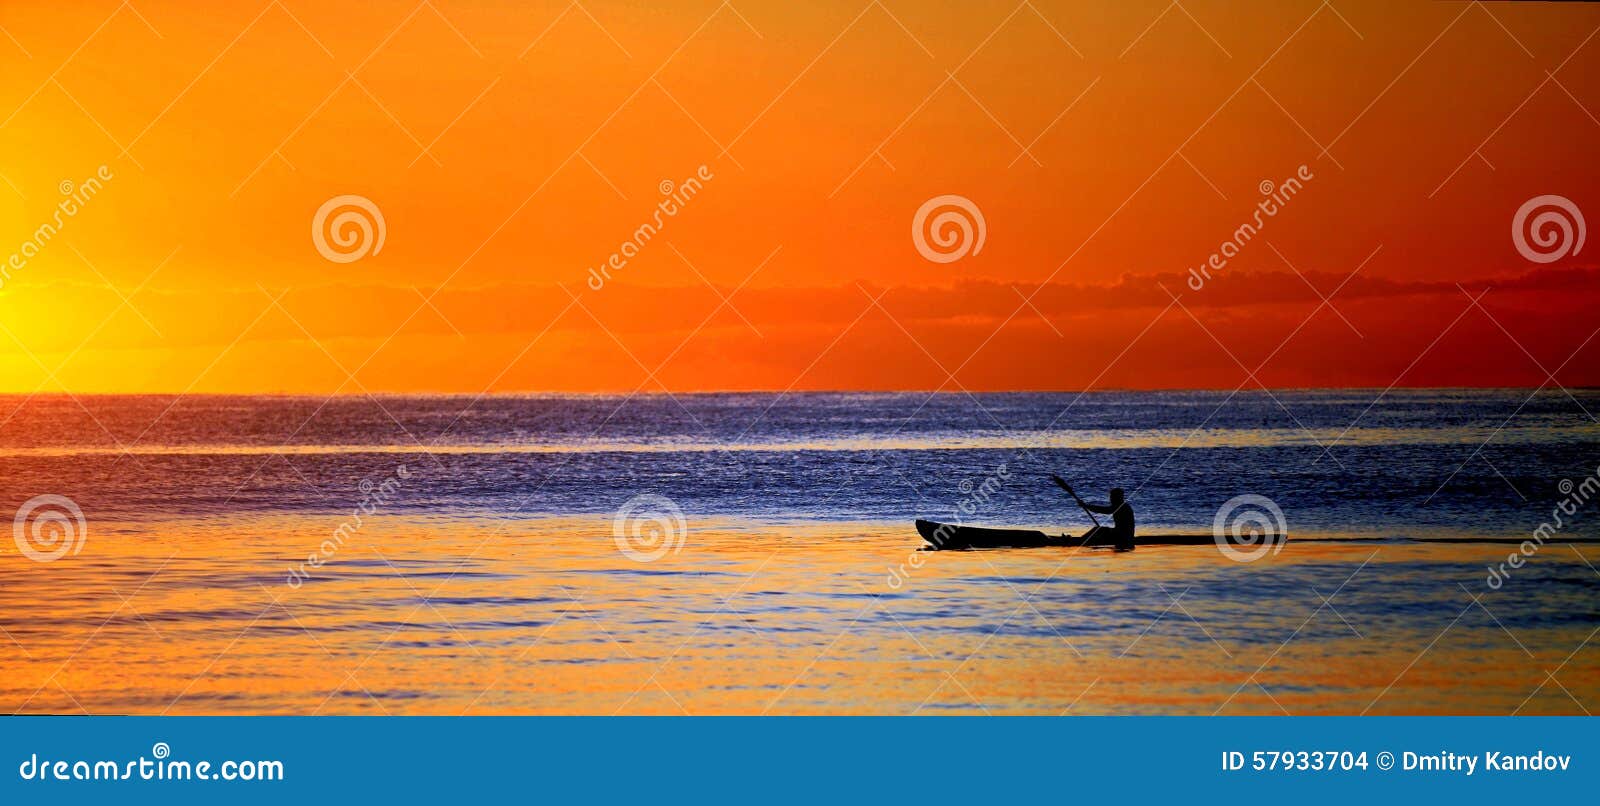 kayak in ocean at sunset